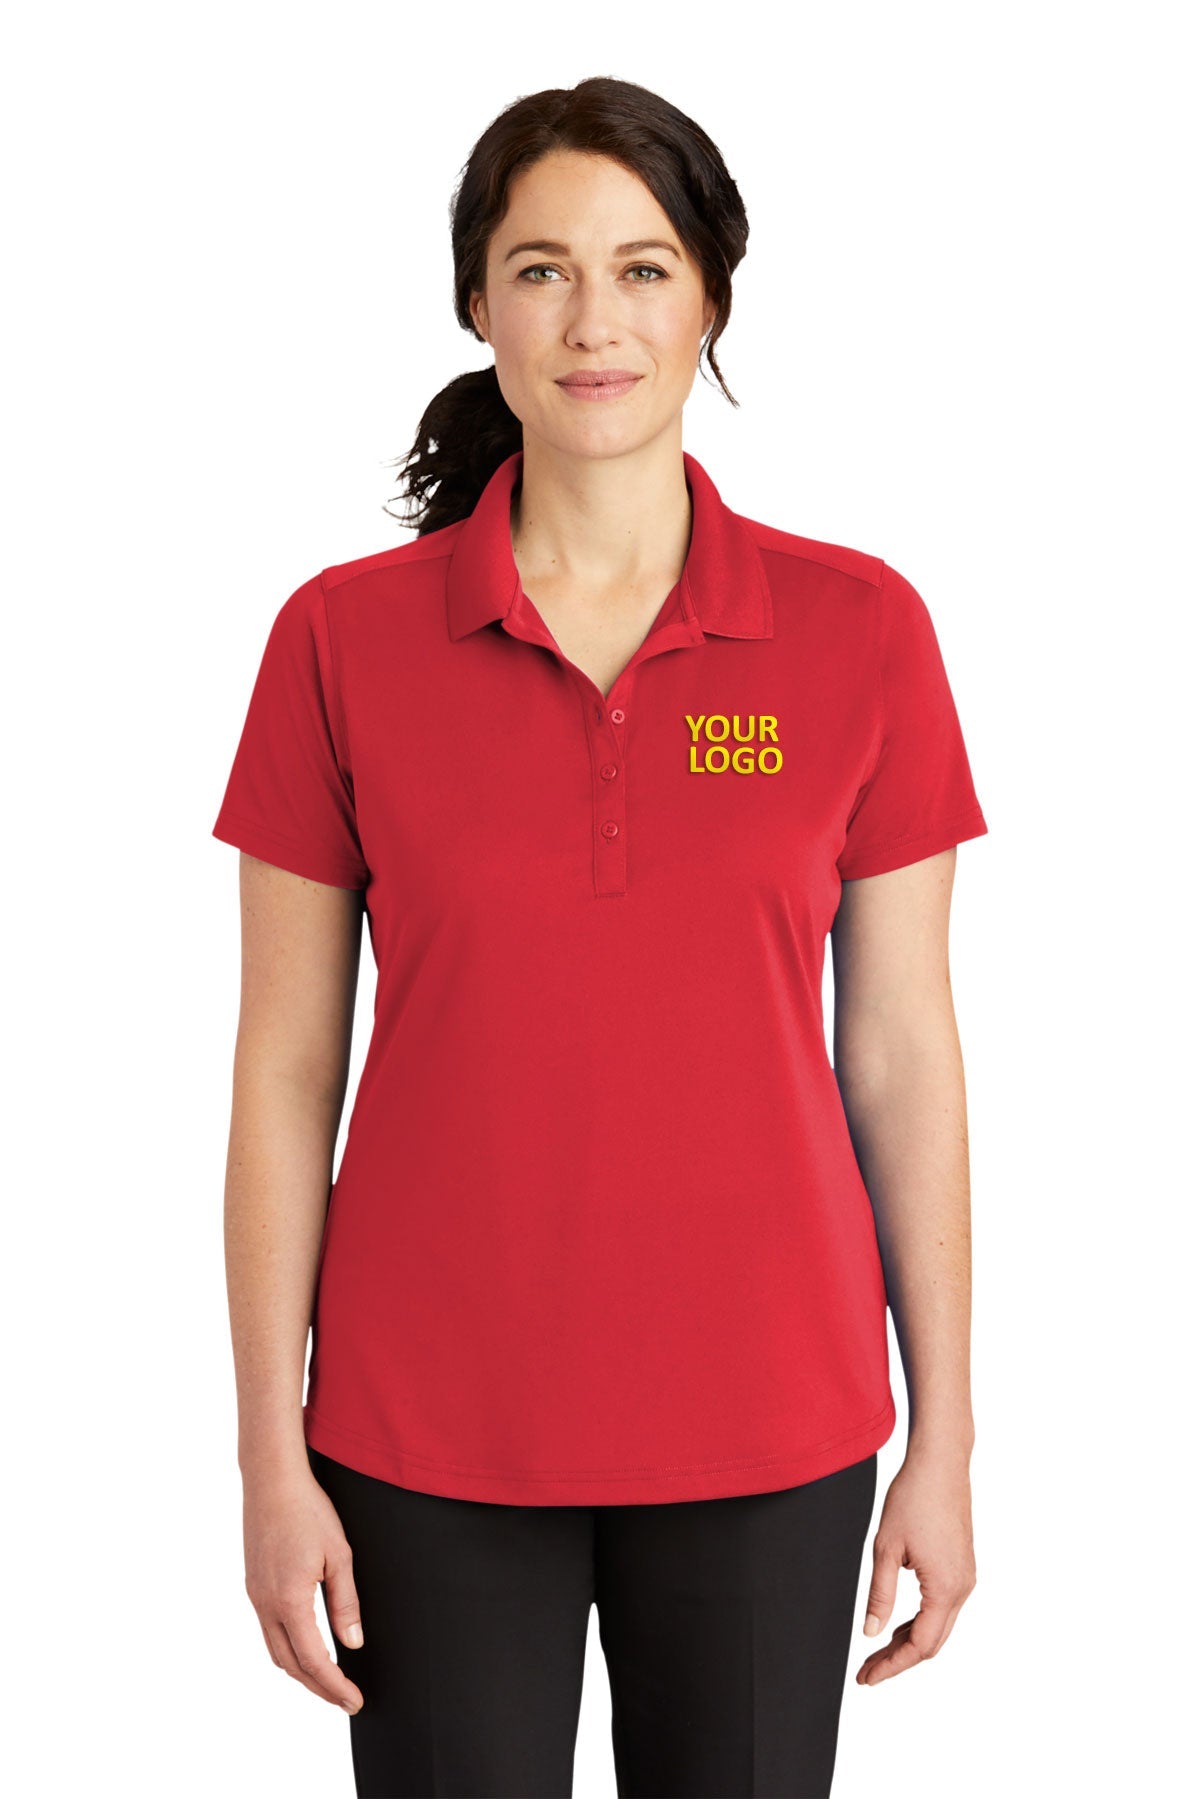 CornerStone Red CS419 polo shirts with company logo